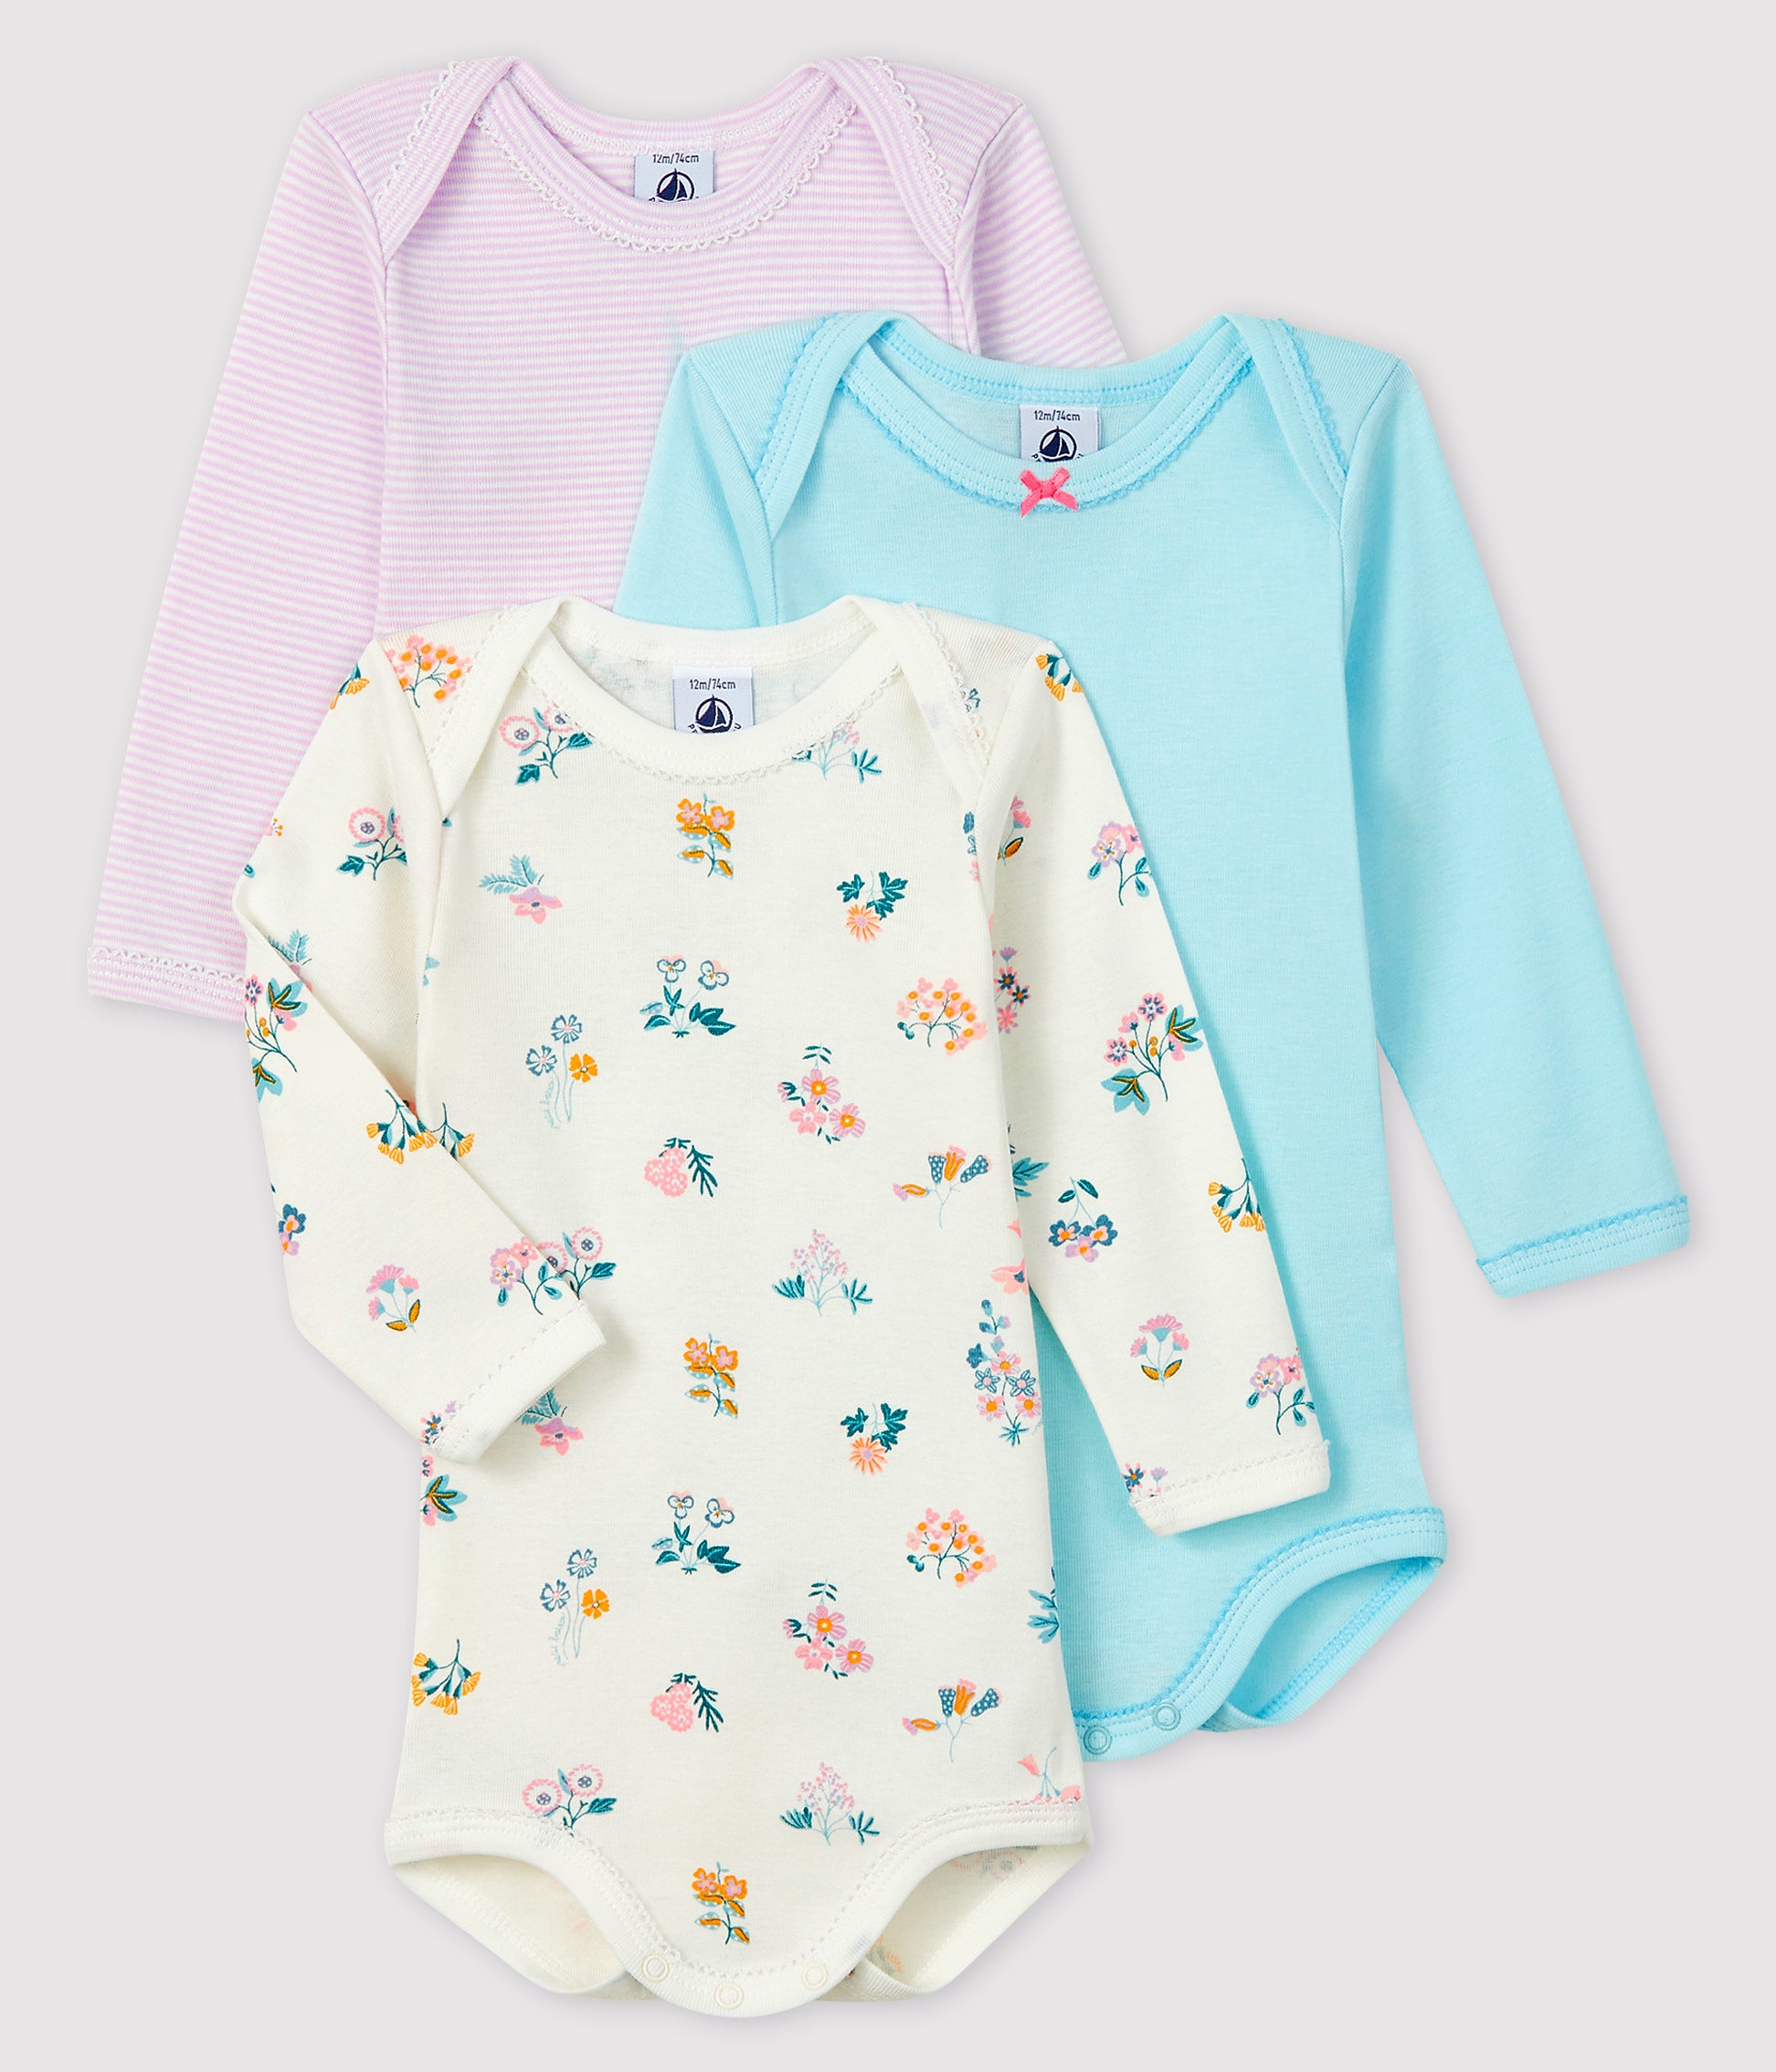 Baby Girls Multicolor Cotton babysuit Sets